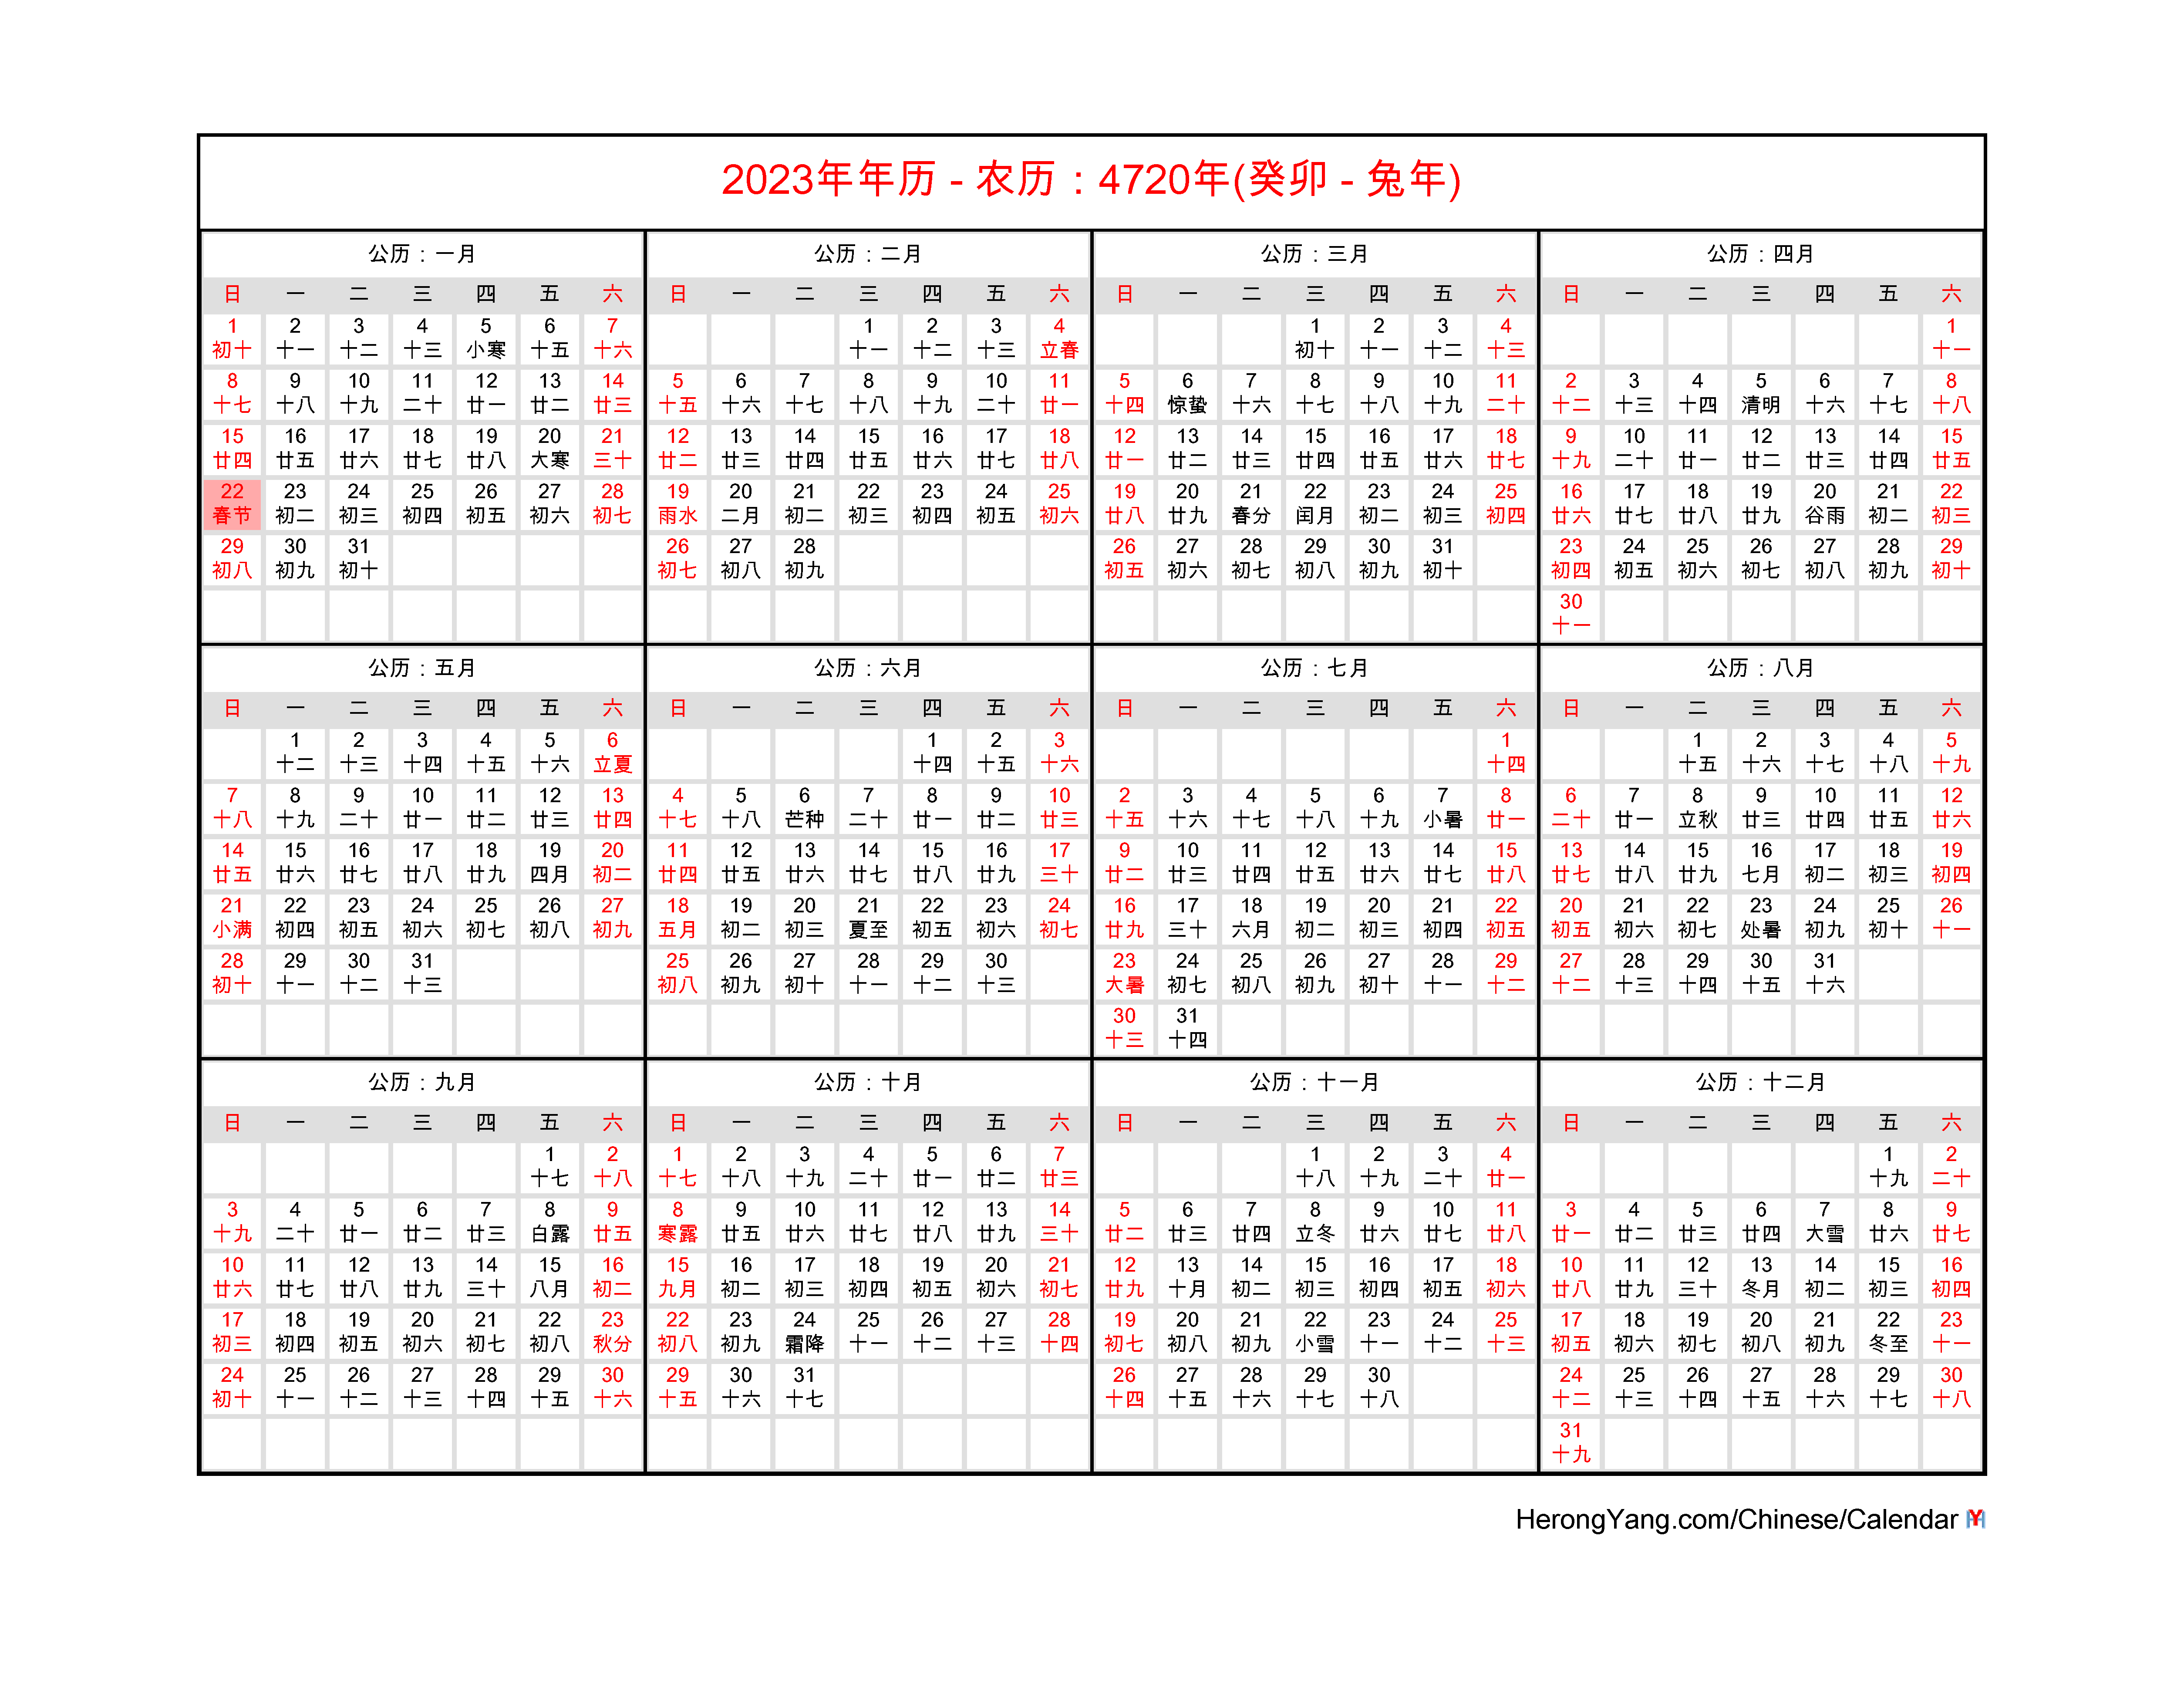 2023 lunar zodiac calendar